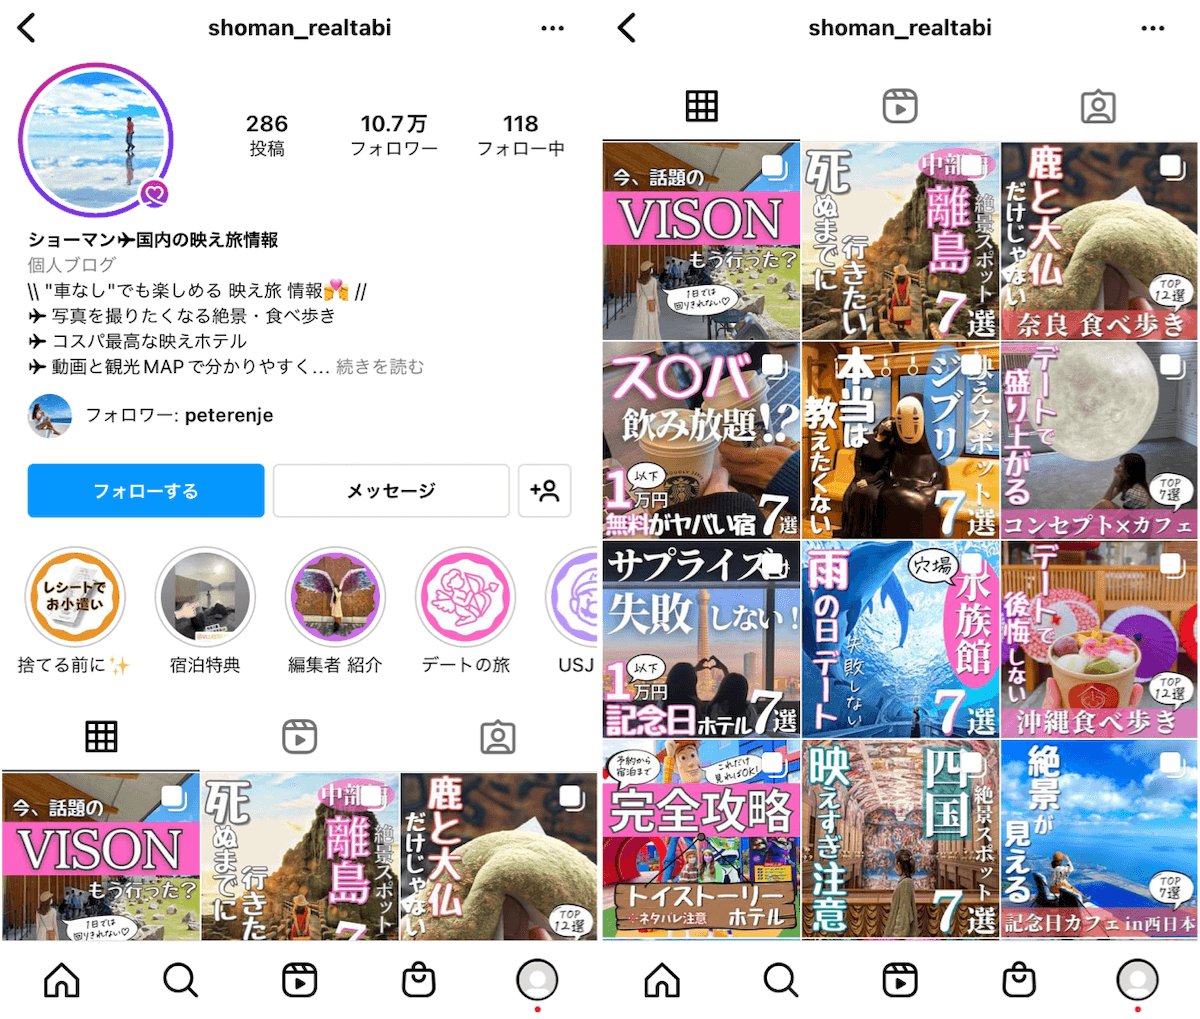 instagram-influencer-hotel-ryokan-shoman_realtabi